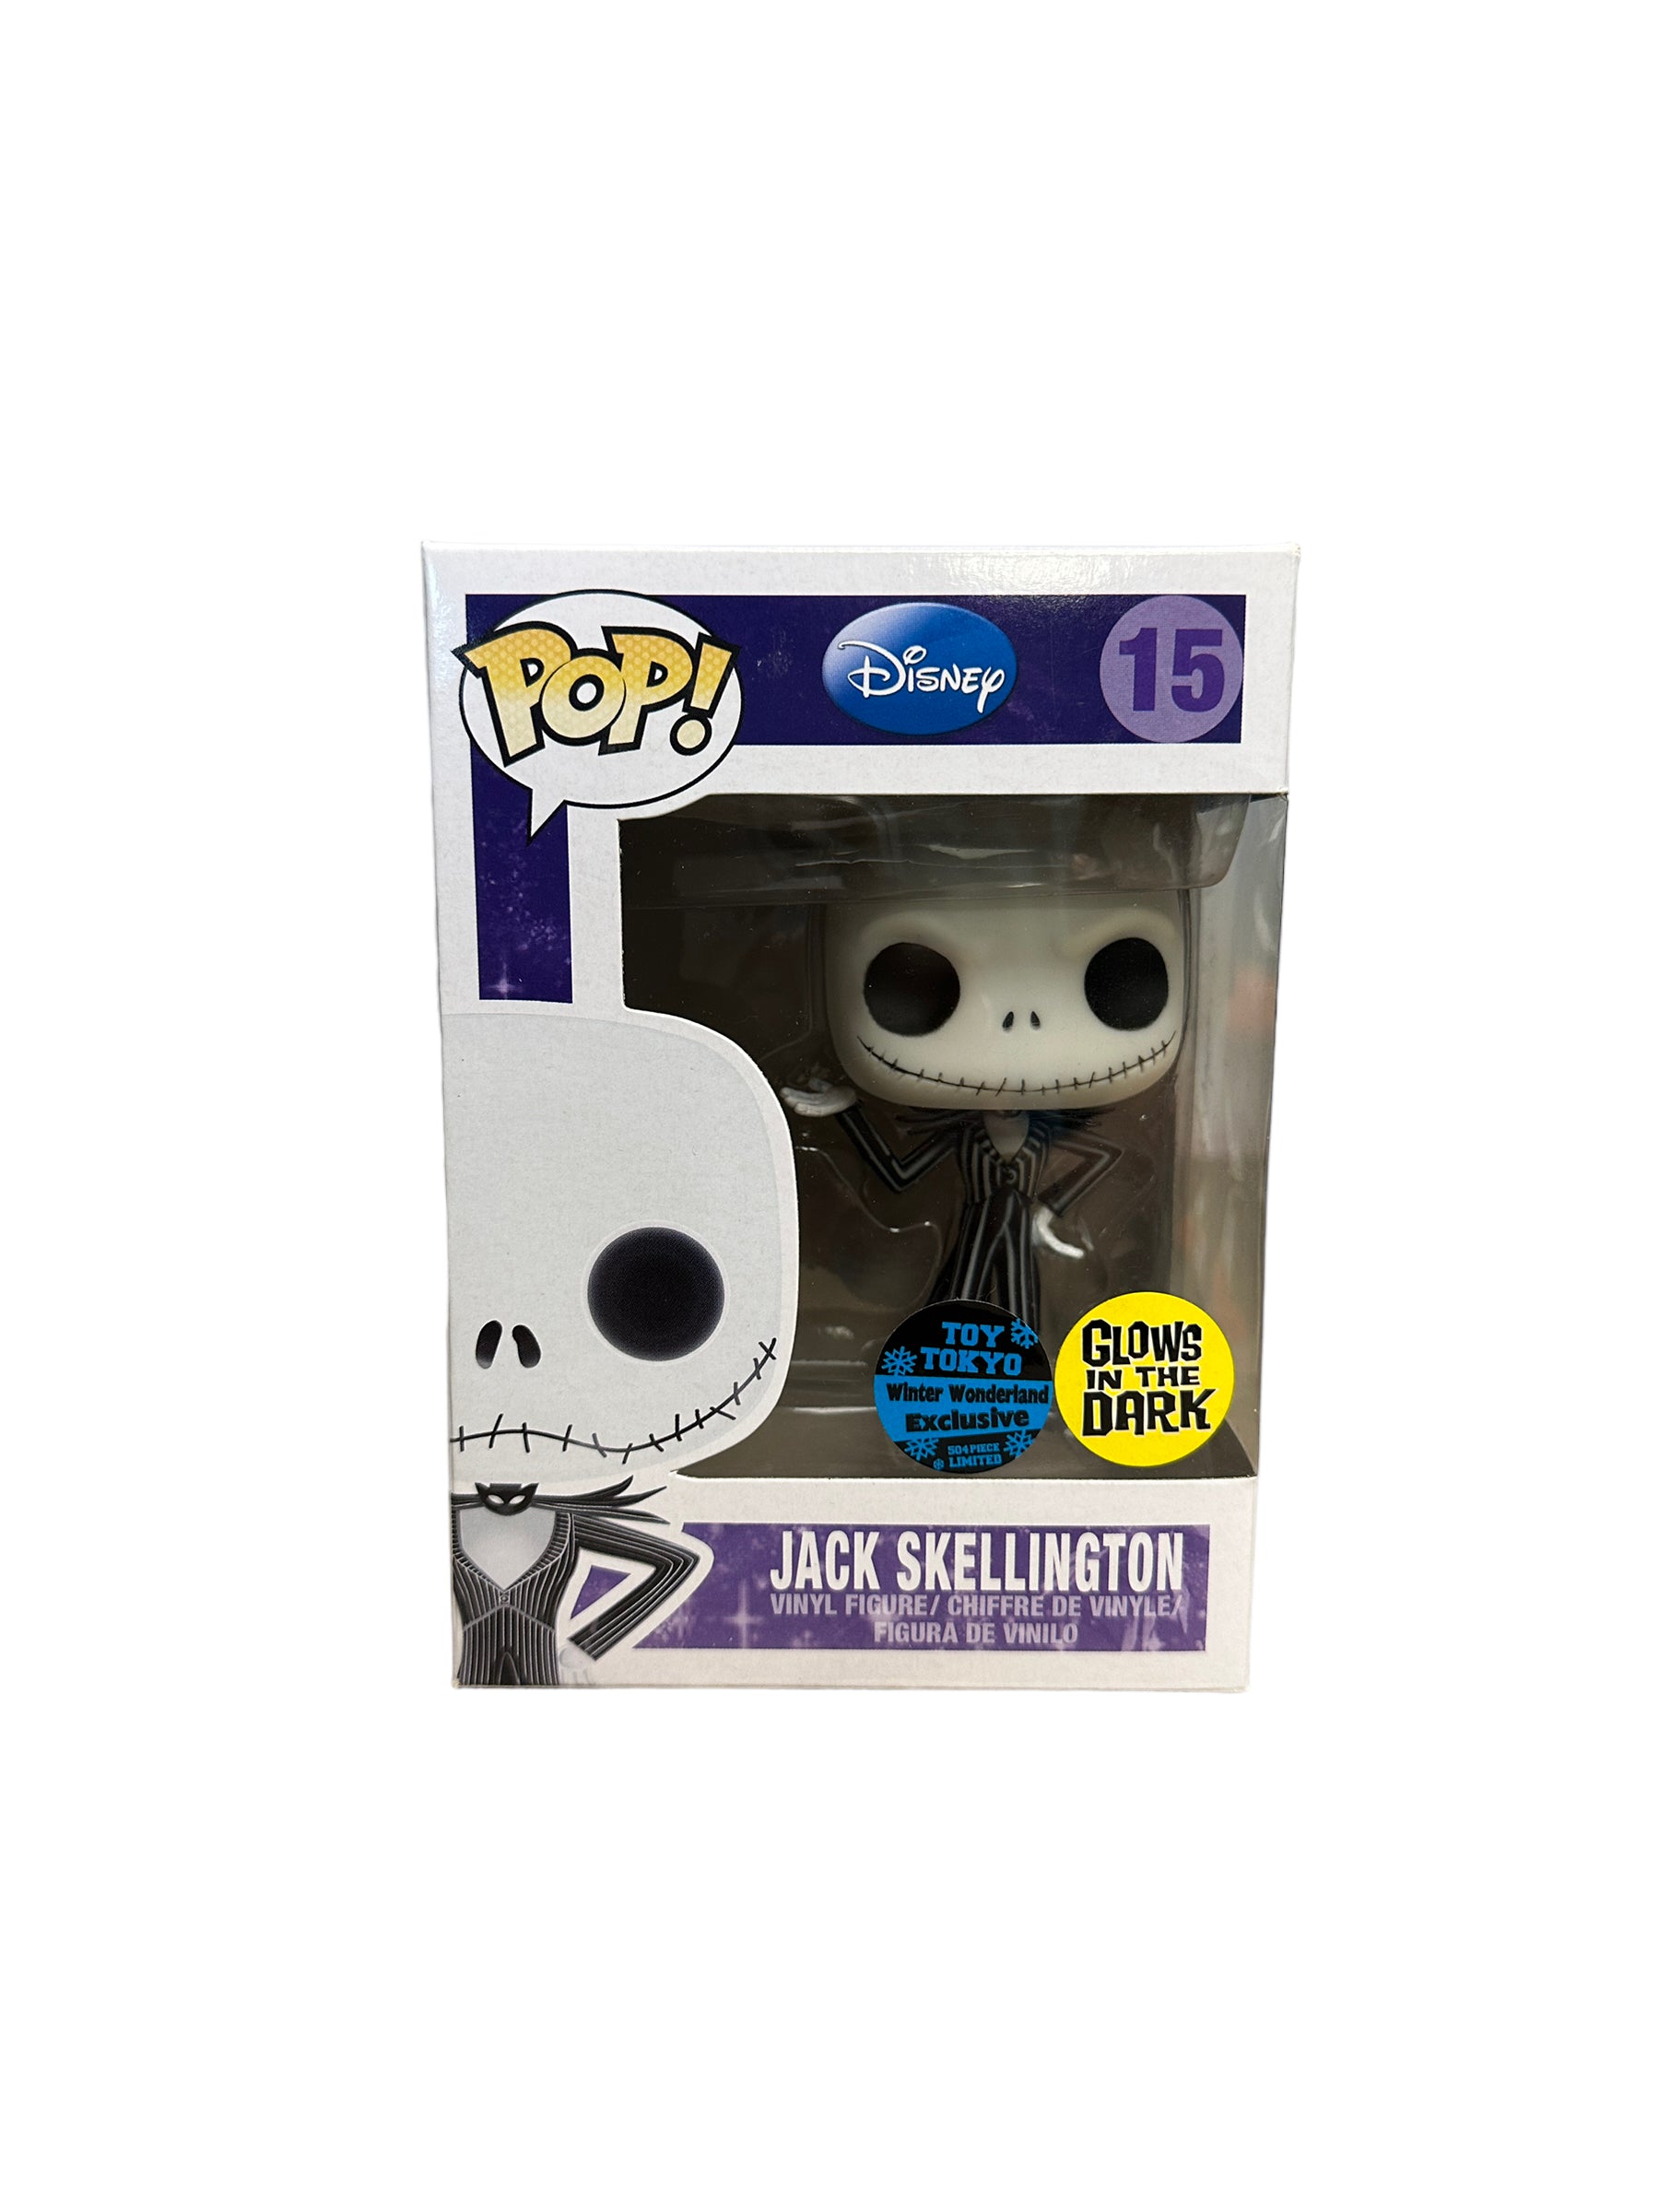 Jack Skellington #15 (Glows in the Dark) Funko Pop! - Disney Series 2 - Toy Tokyo / Winter Wonderland Exclusive LE504 Pcs Error Sticker - Condition 8.75/10